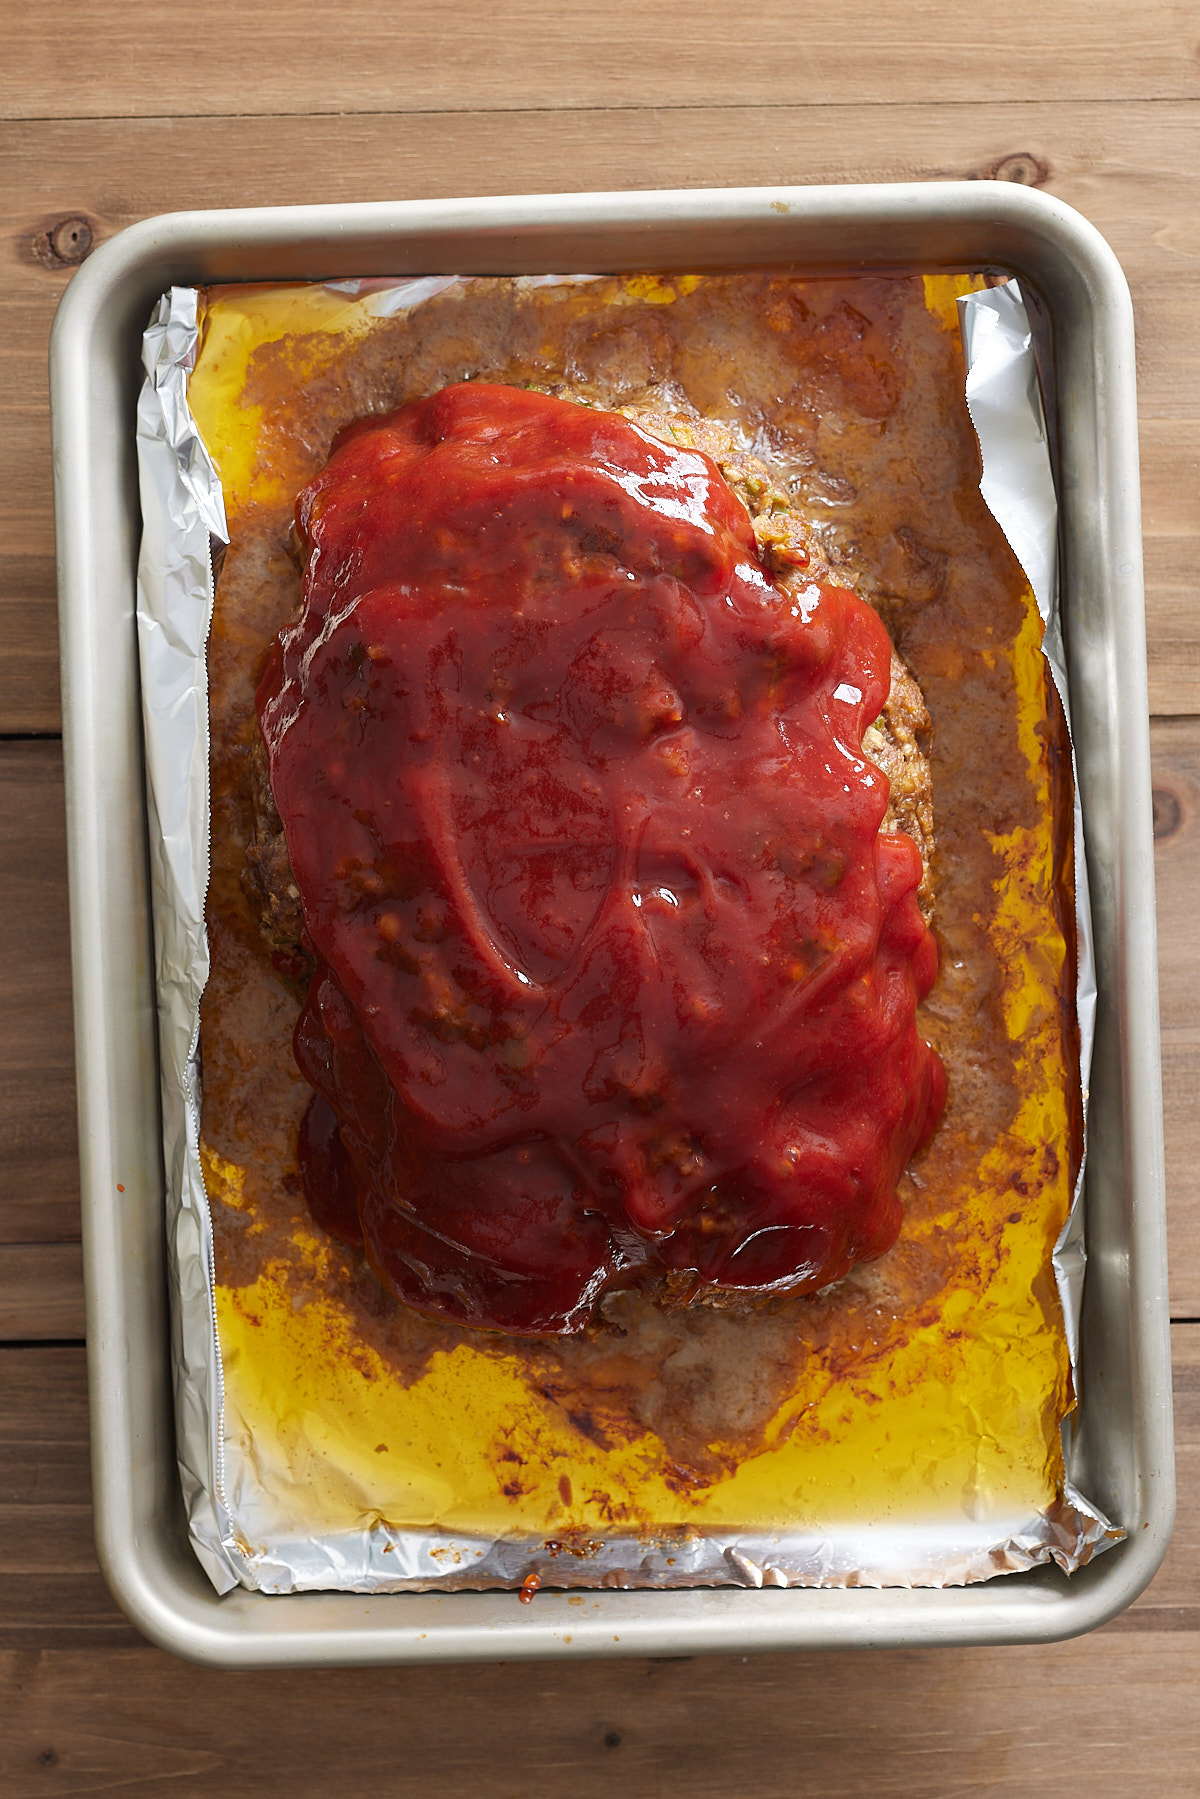 meatloaf covered in glaze before finished baking